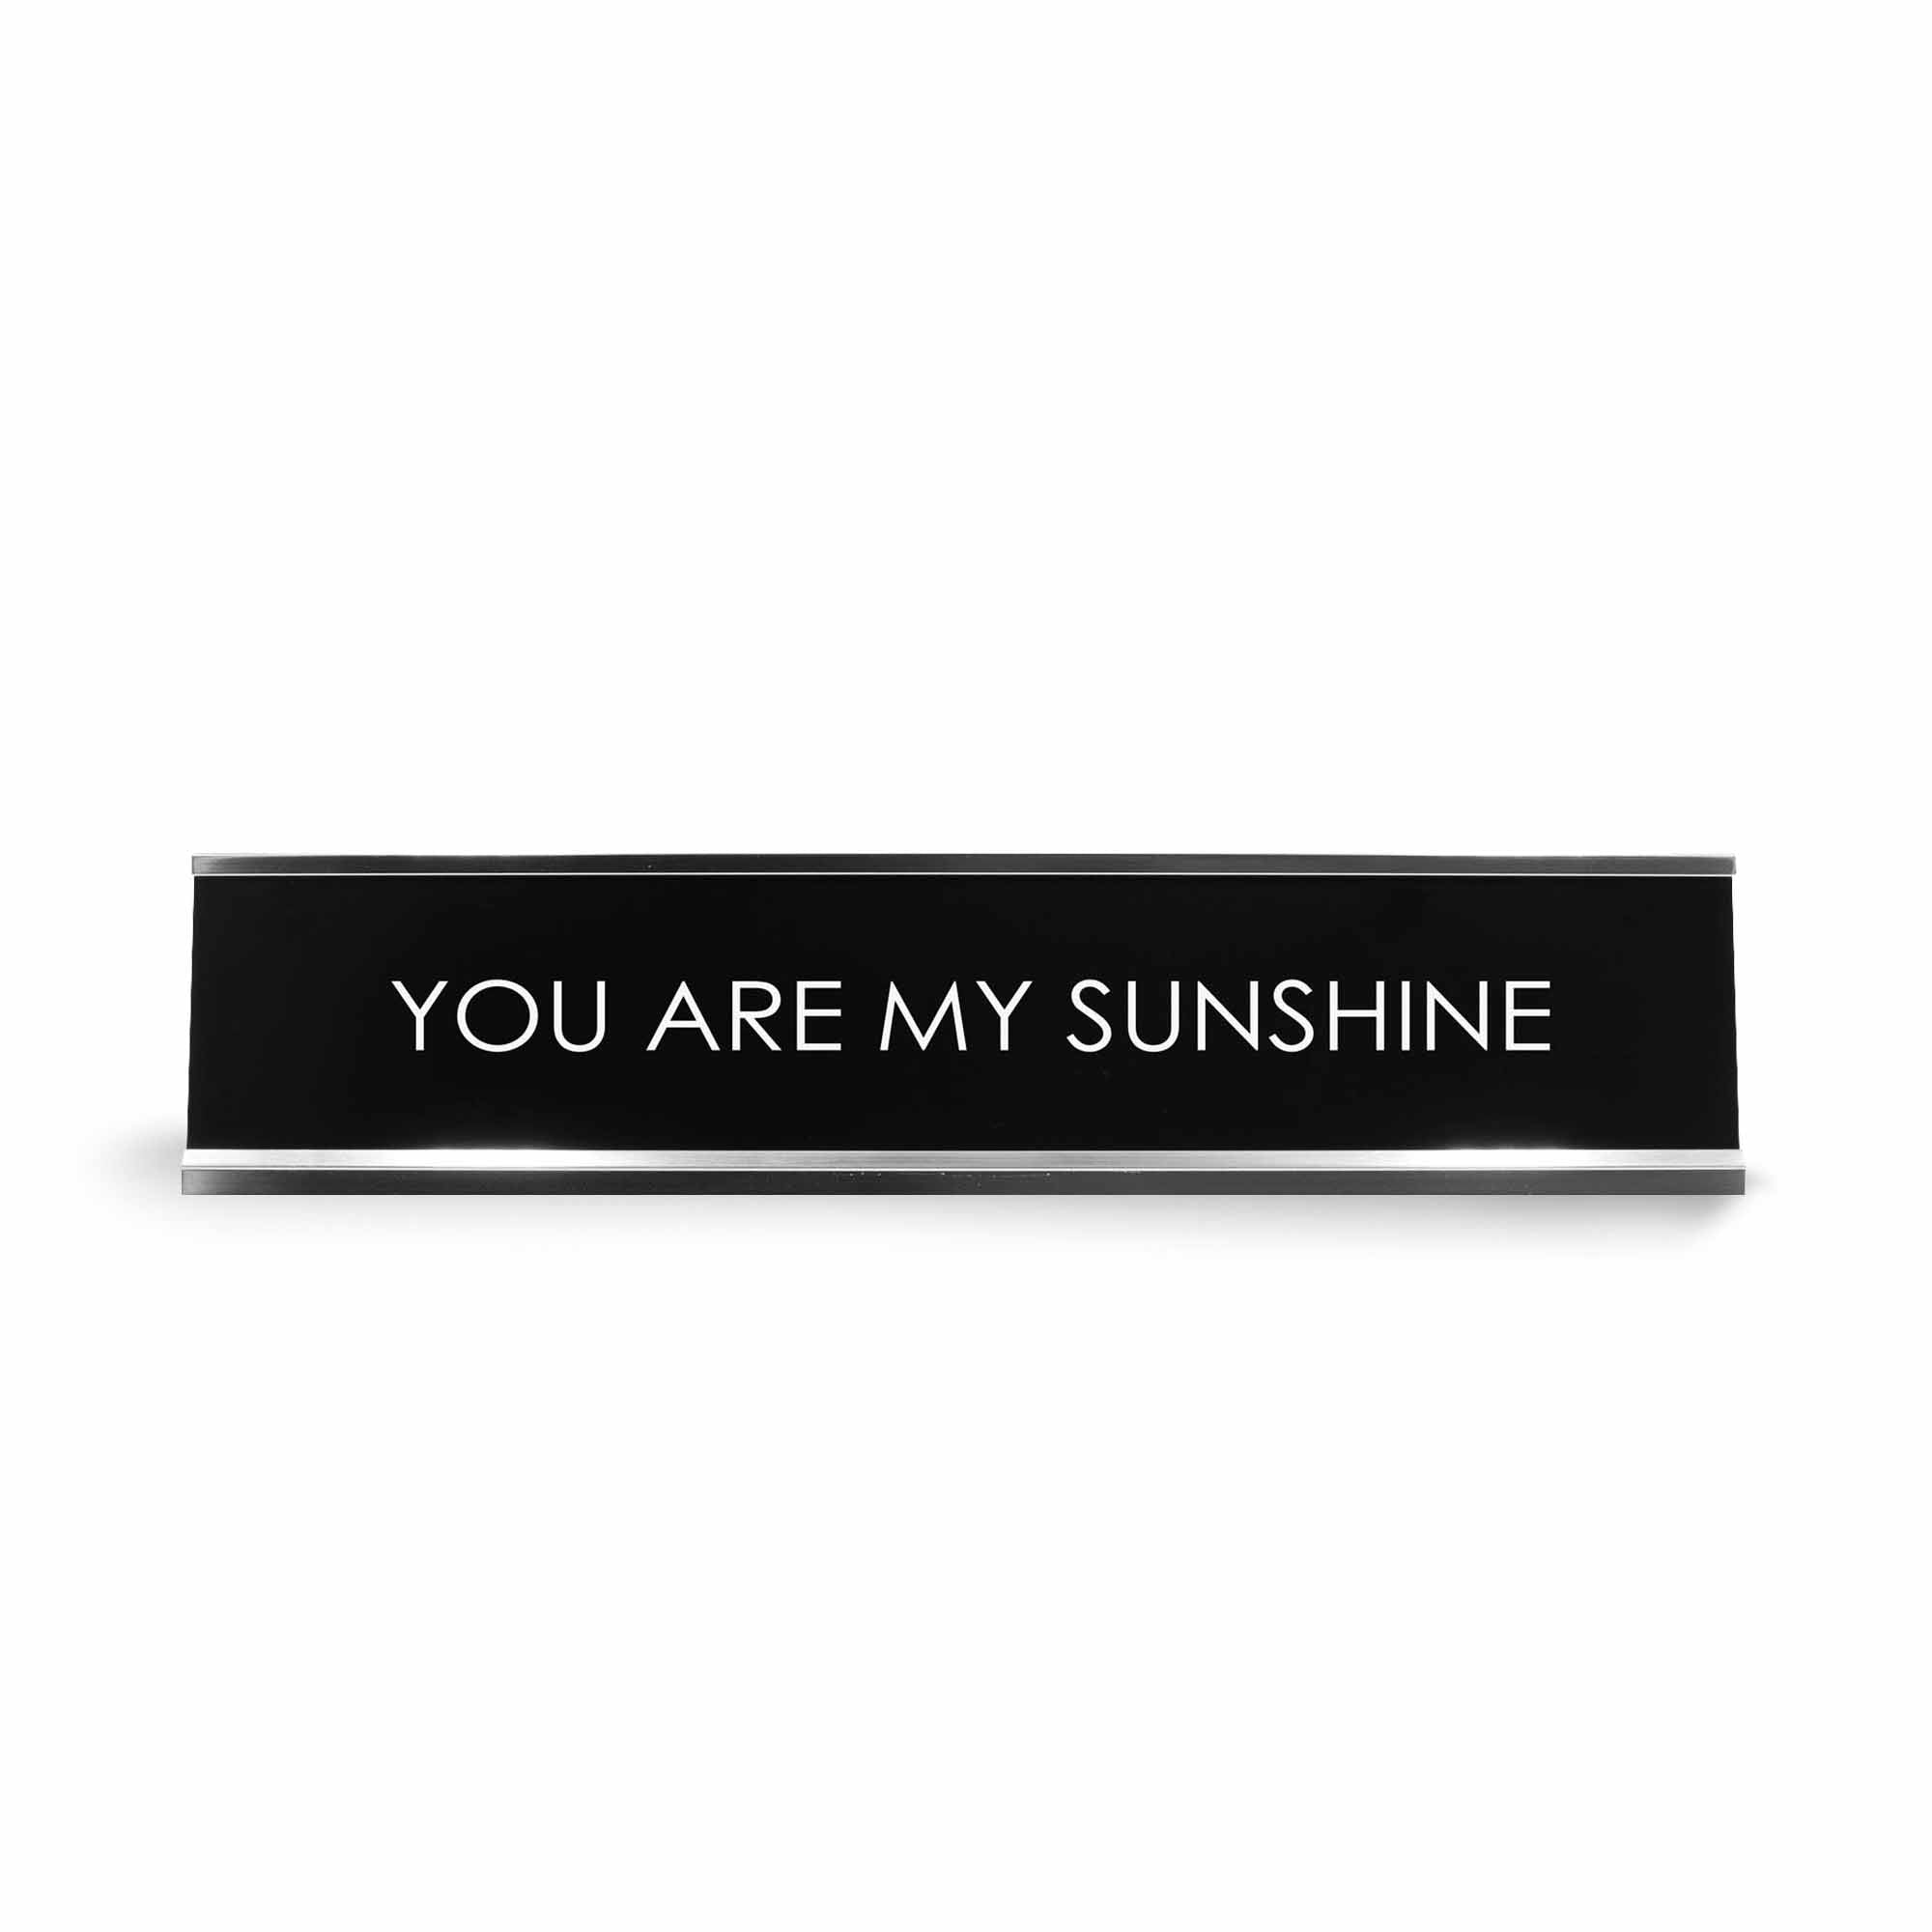 You Are My Sunshine Novelty Desk Sign